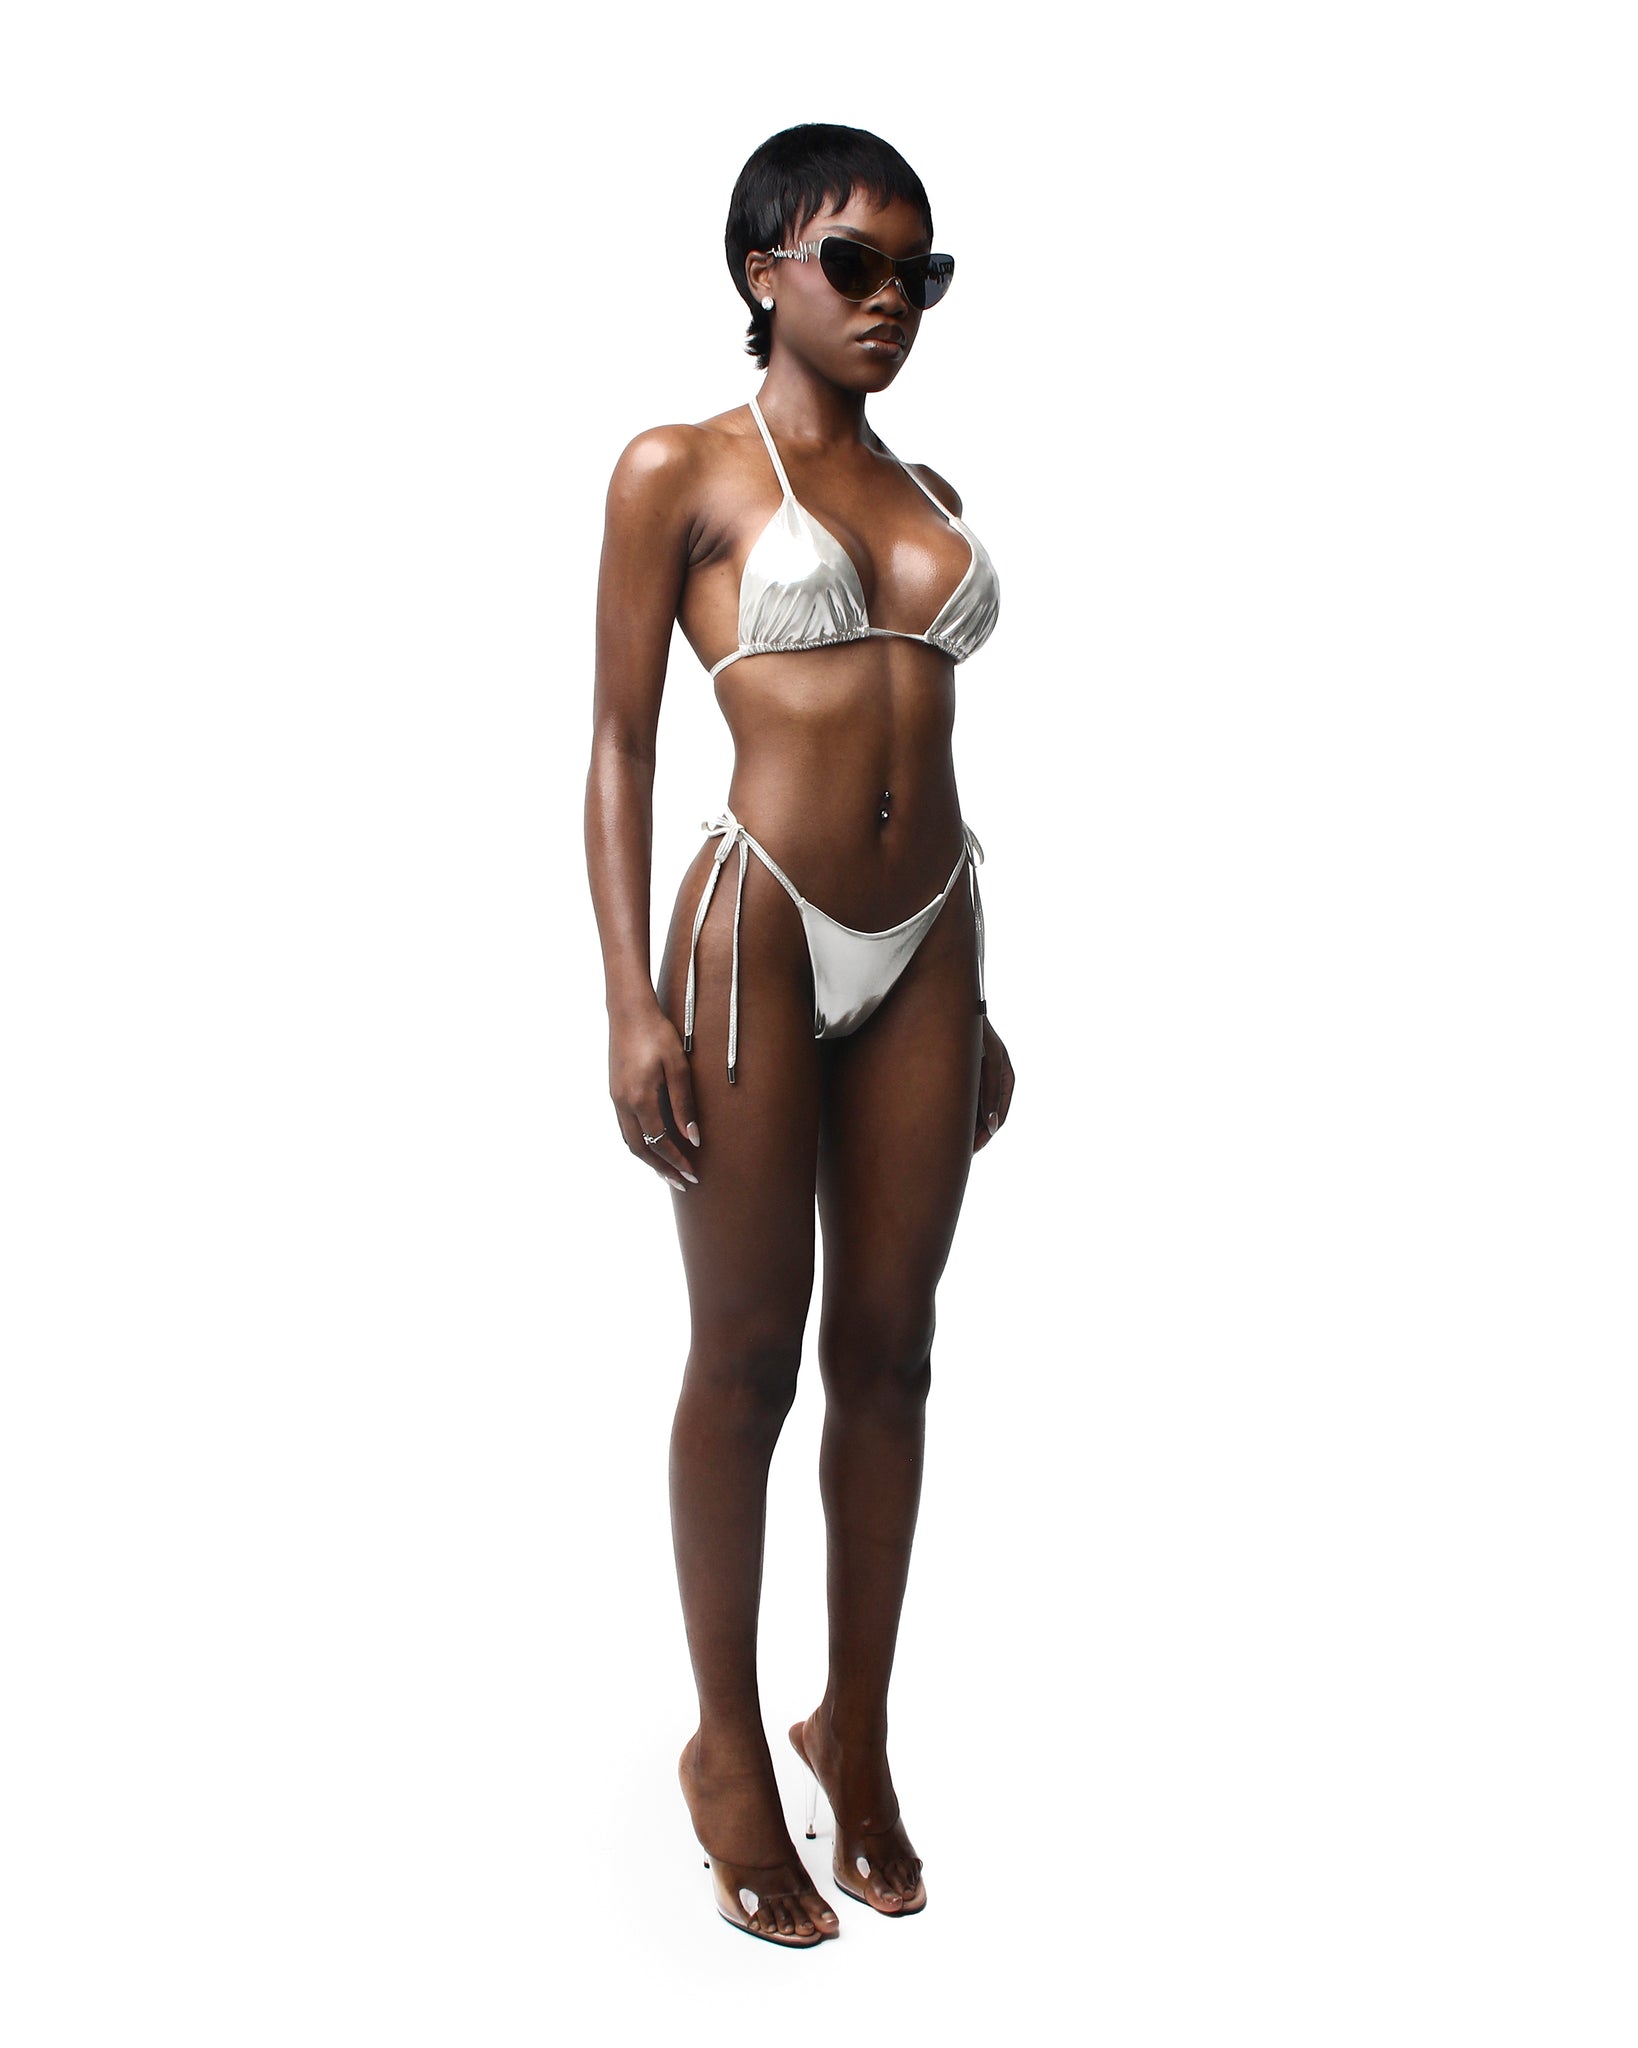 bikini set with metallic shades and clear mules, silimiar to jadedldn